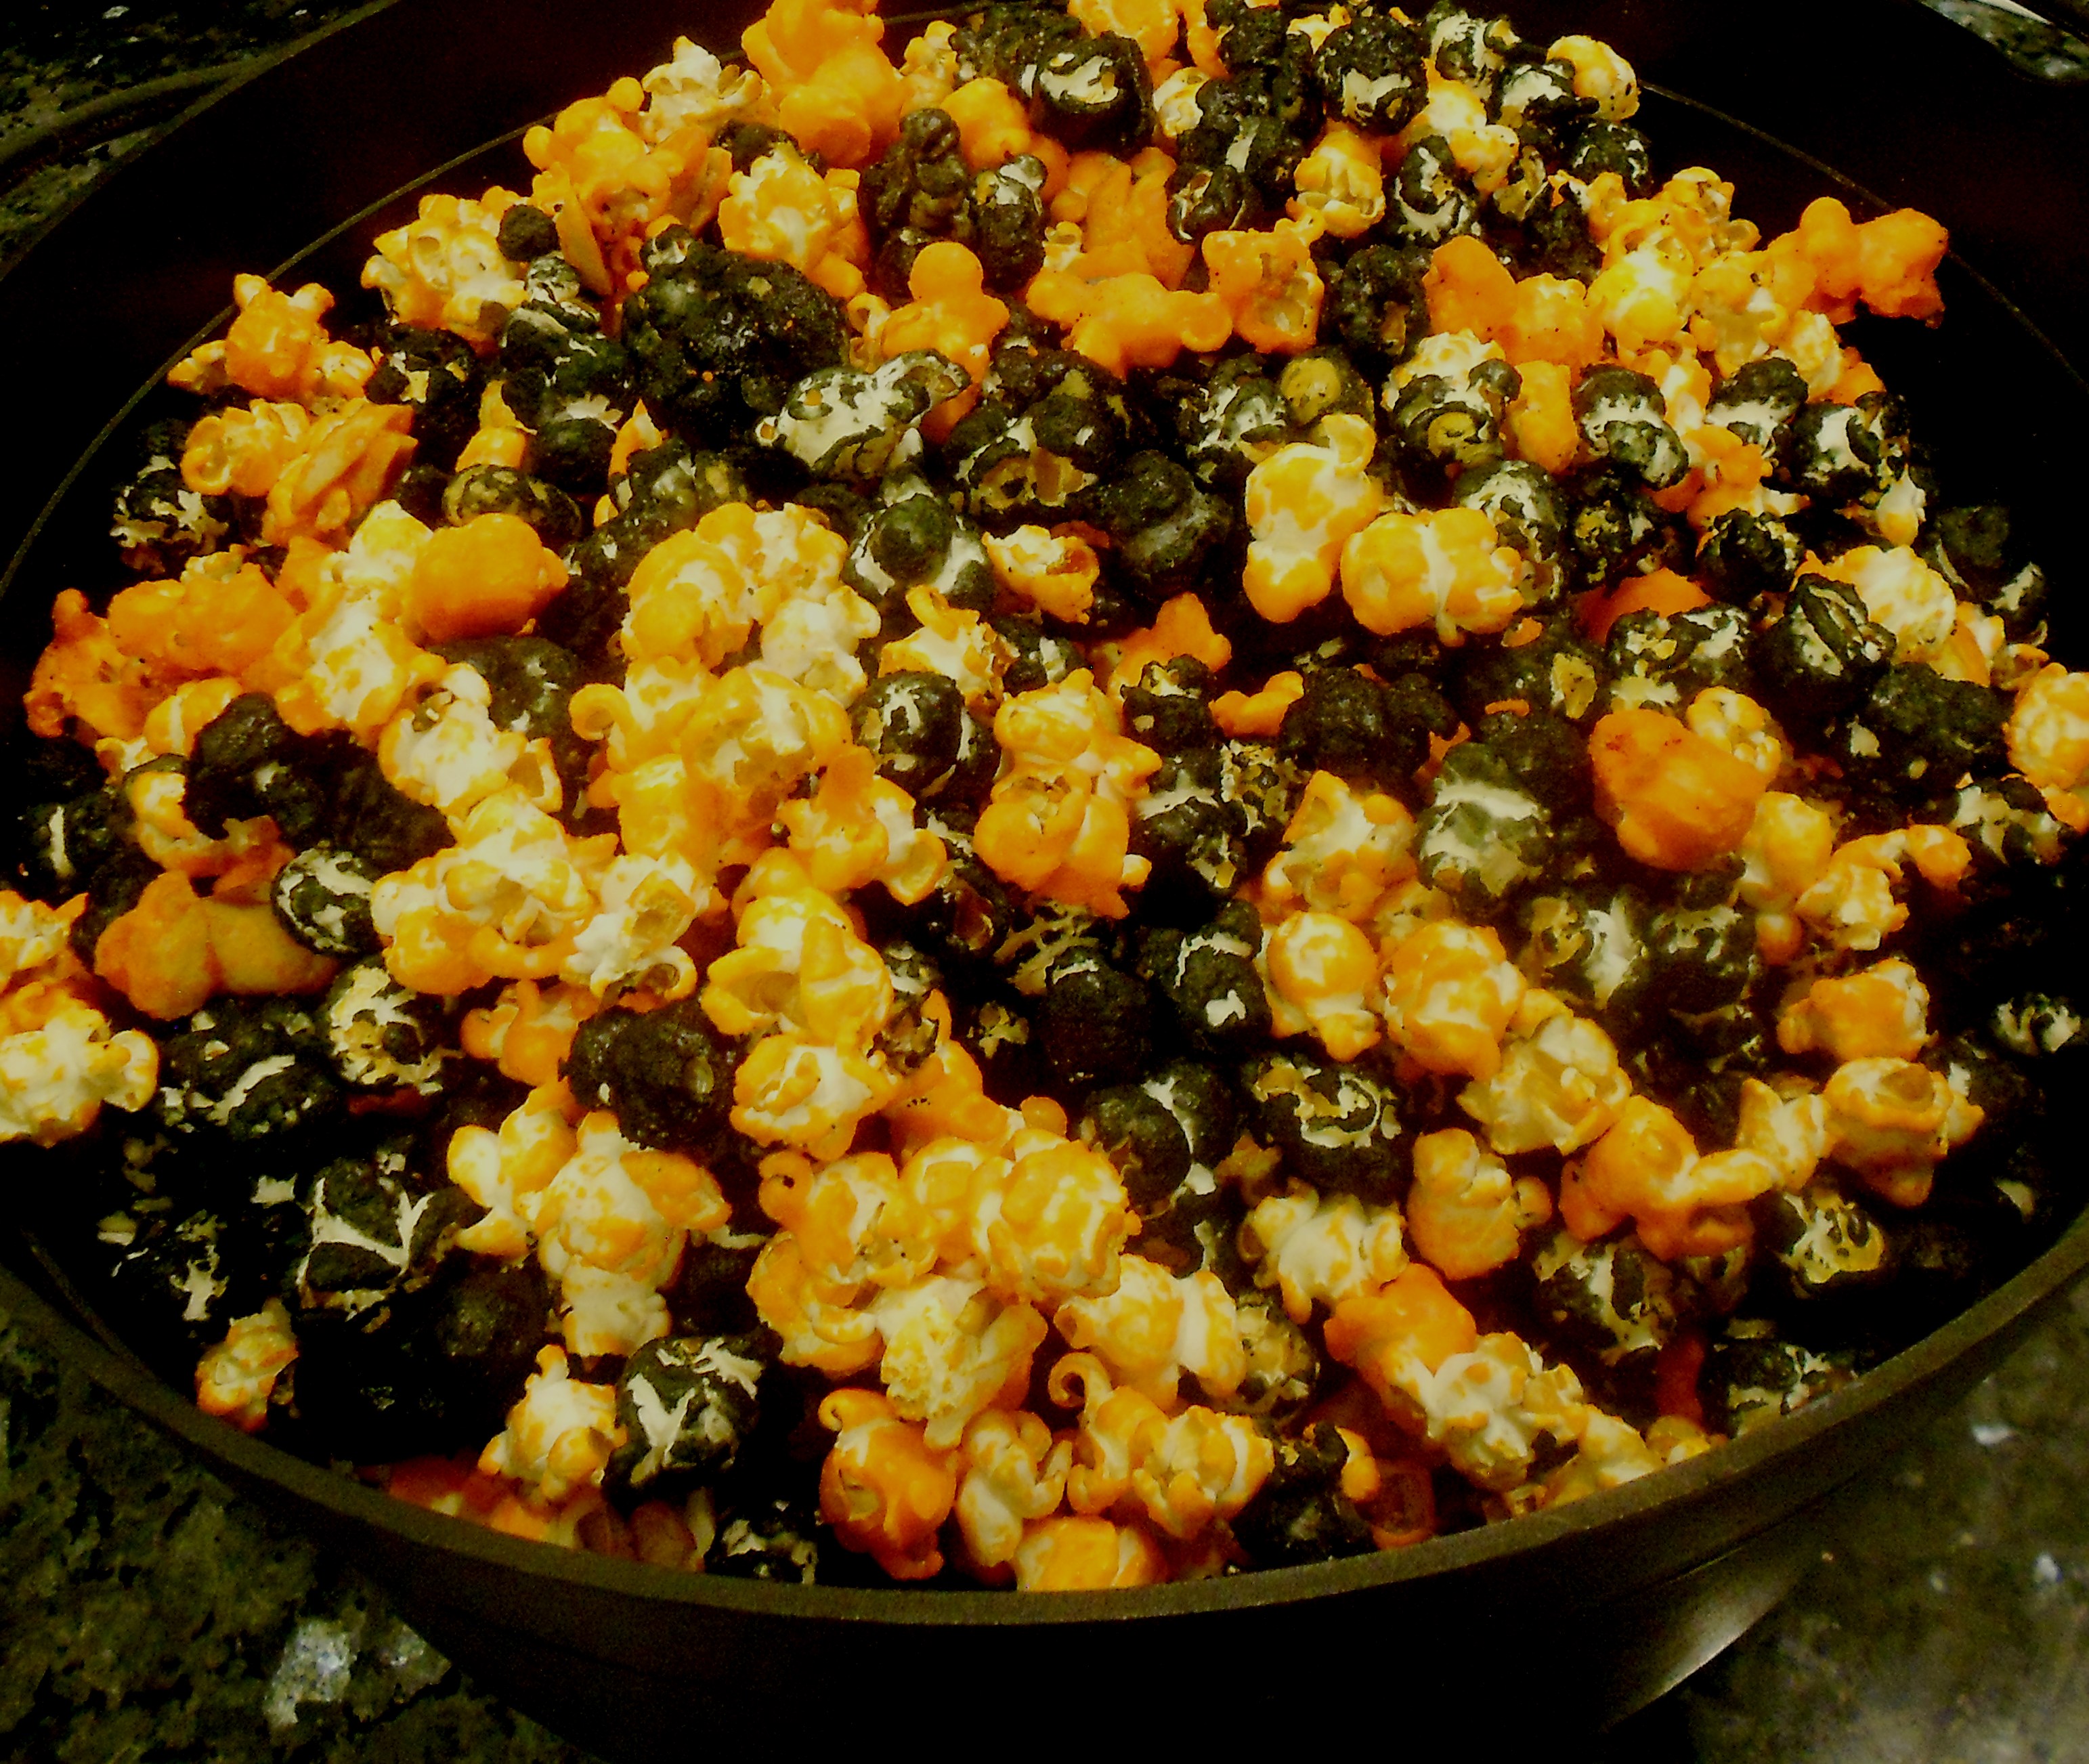 Orange & Black Popcorn Mix Recipe